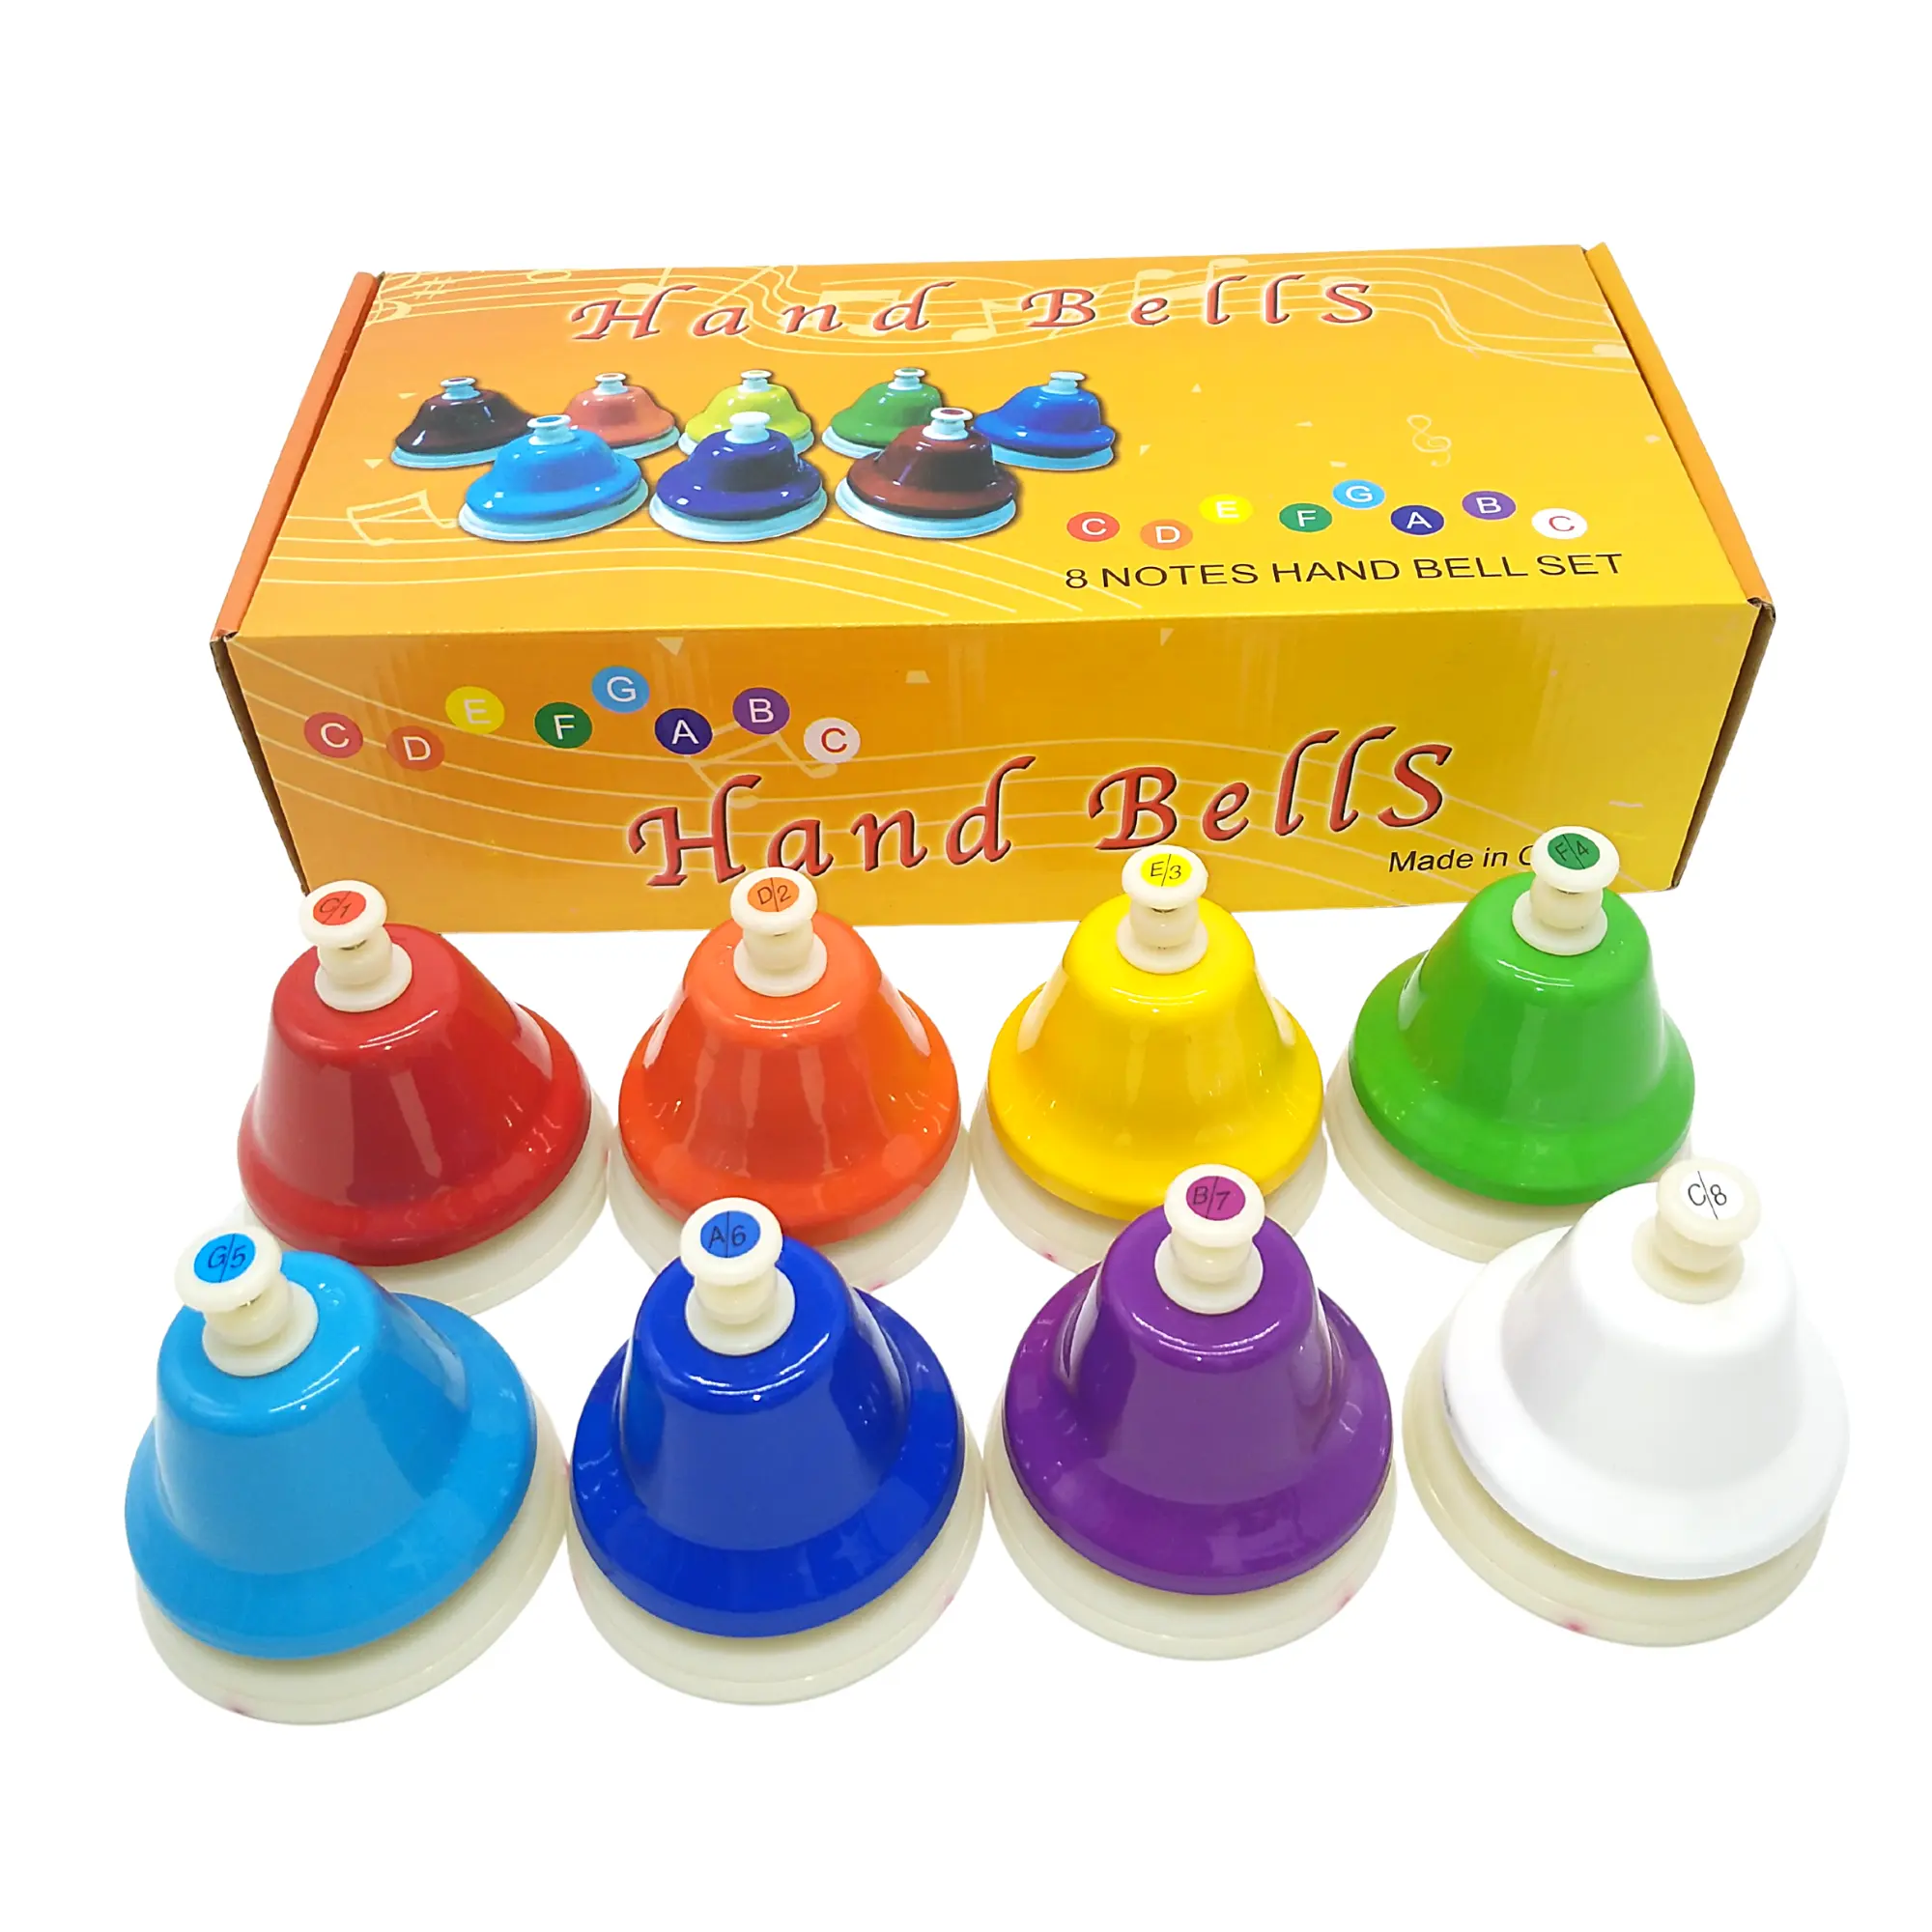 HB8-5 Desk Bells Set for Kids 8 Notes Diatonic Colorful Metal Hand Bells Kids Musical Instruments